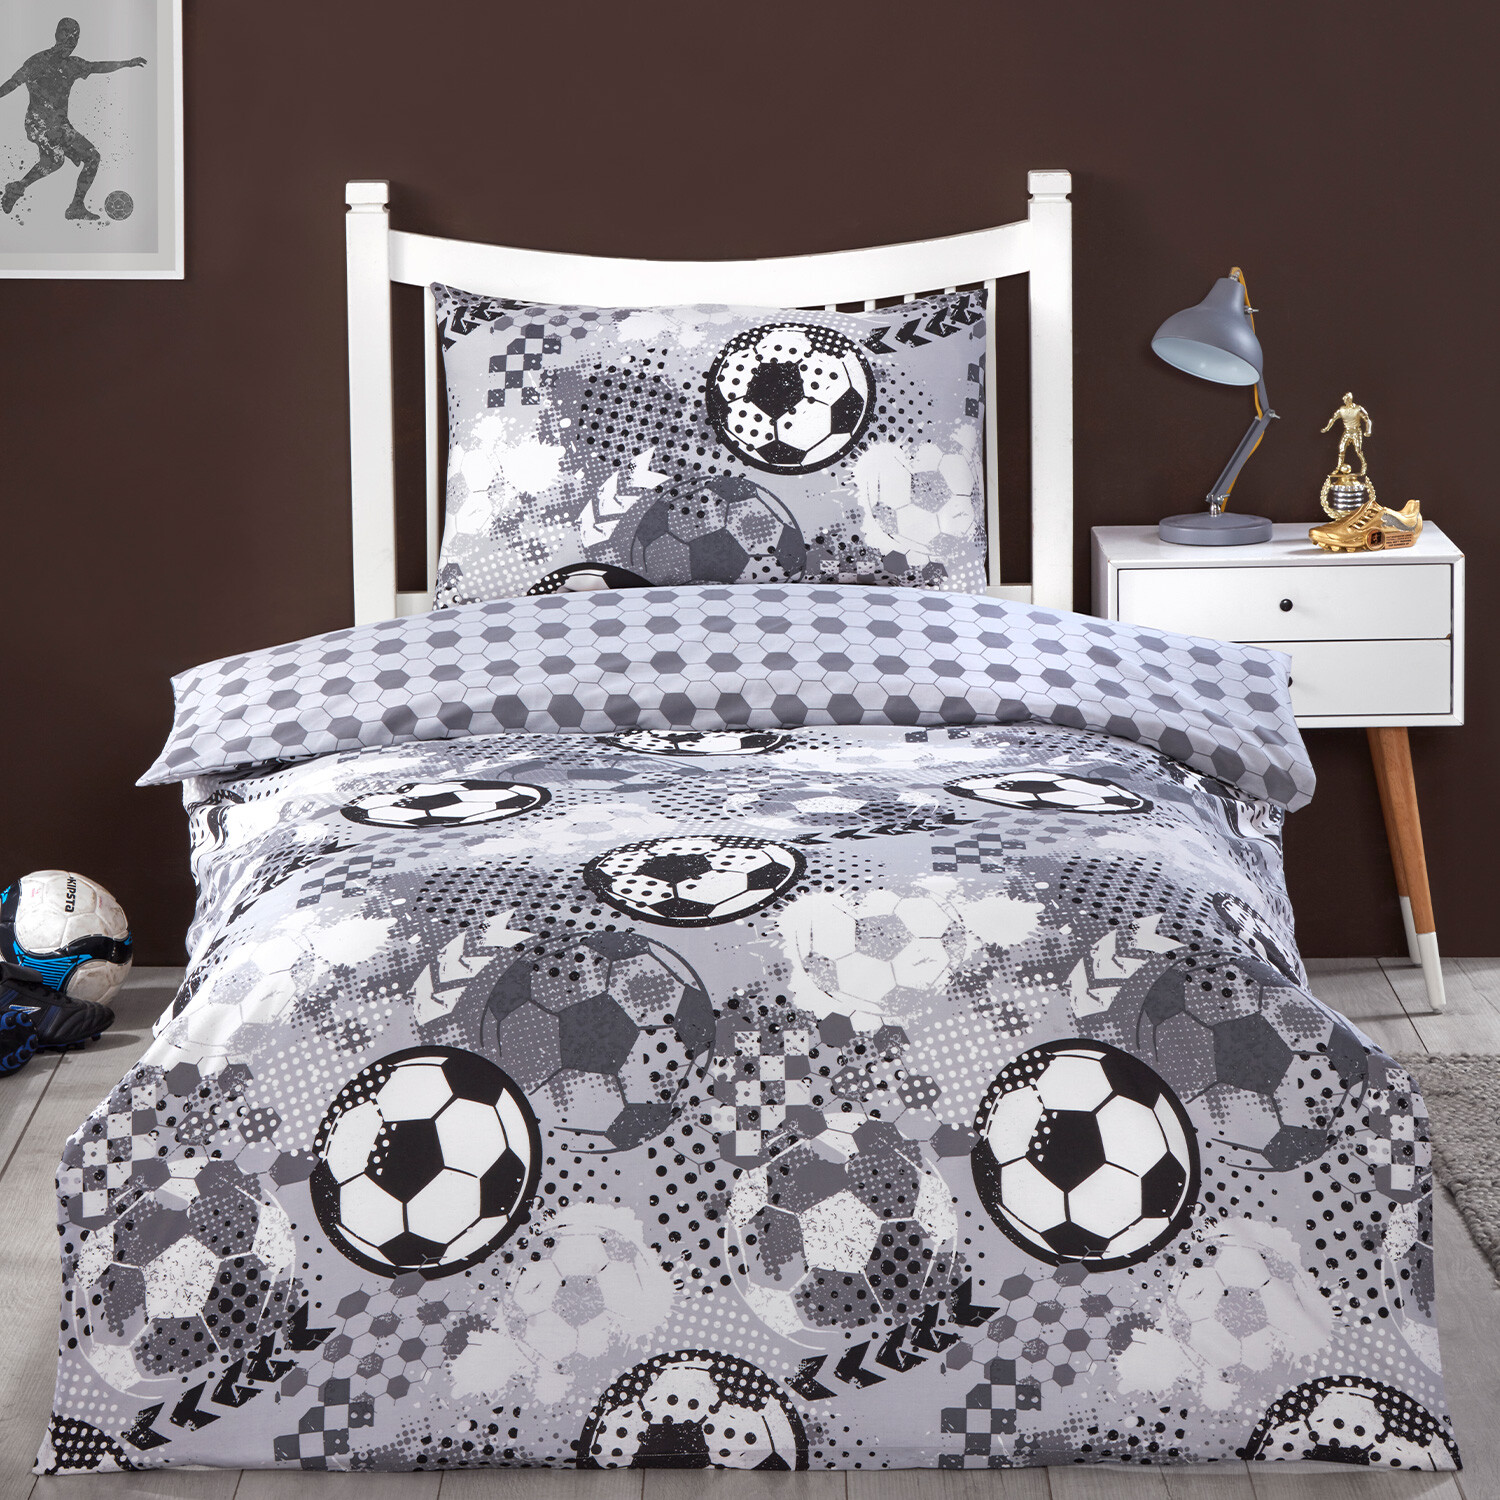 Football Duvet Cover and Pillowcase Set - Grey Image 1